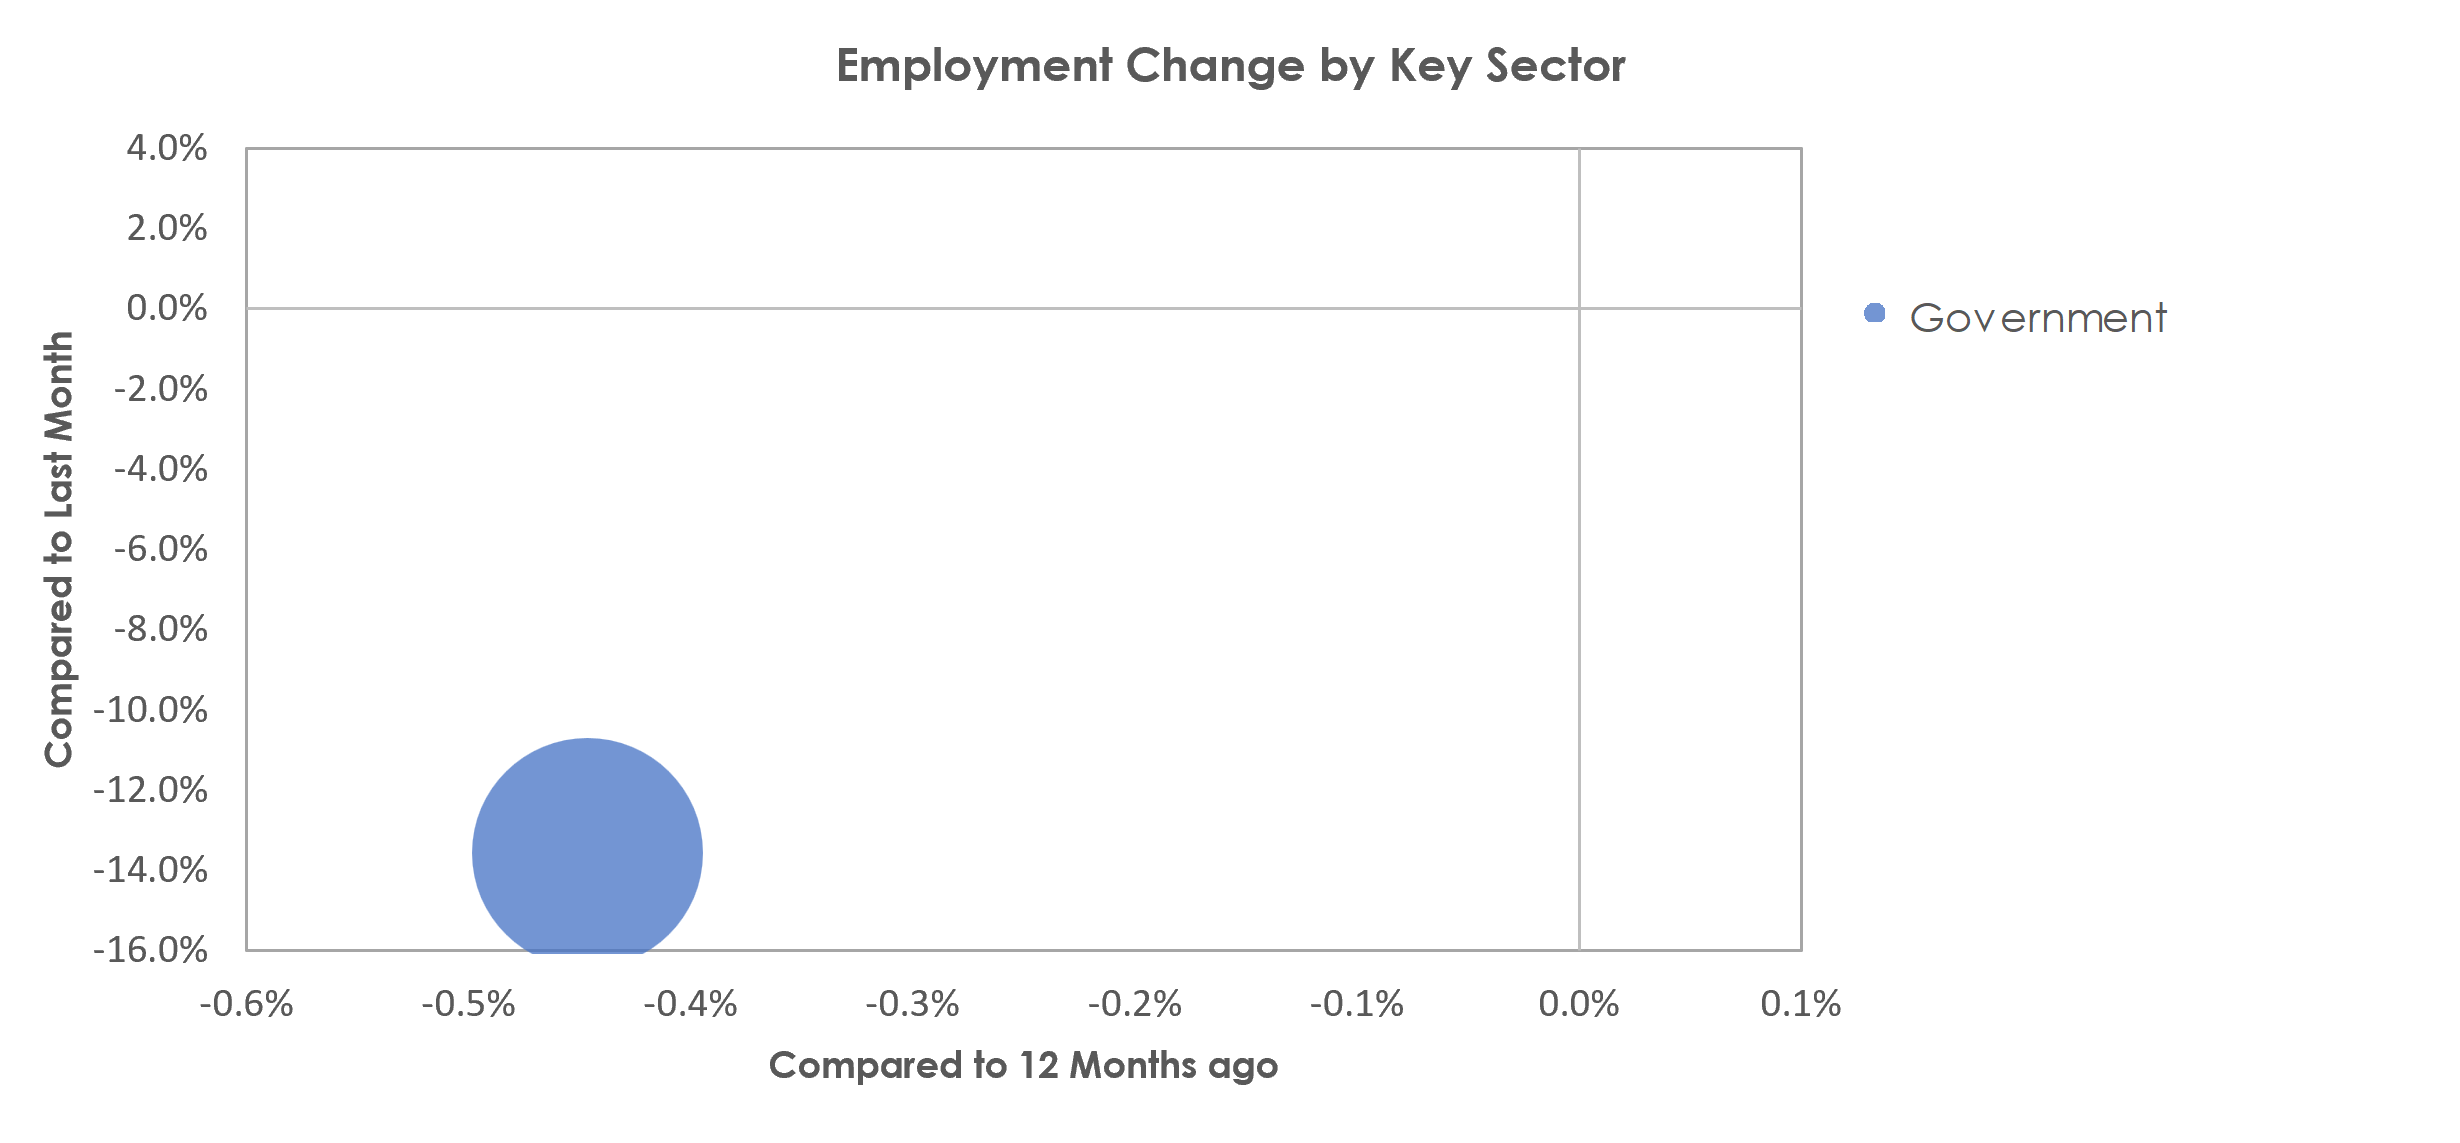 Blacksburg-Christiansburg-Radford, VA Unemployment by Industry January 2023